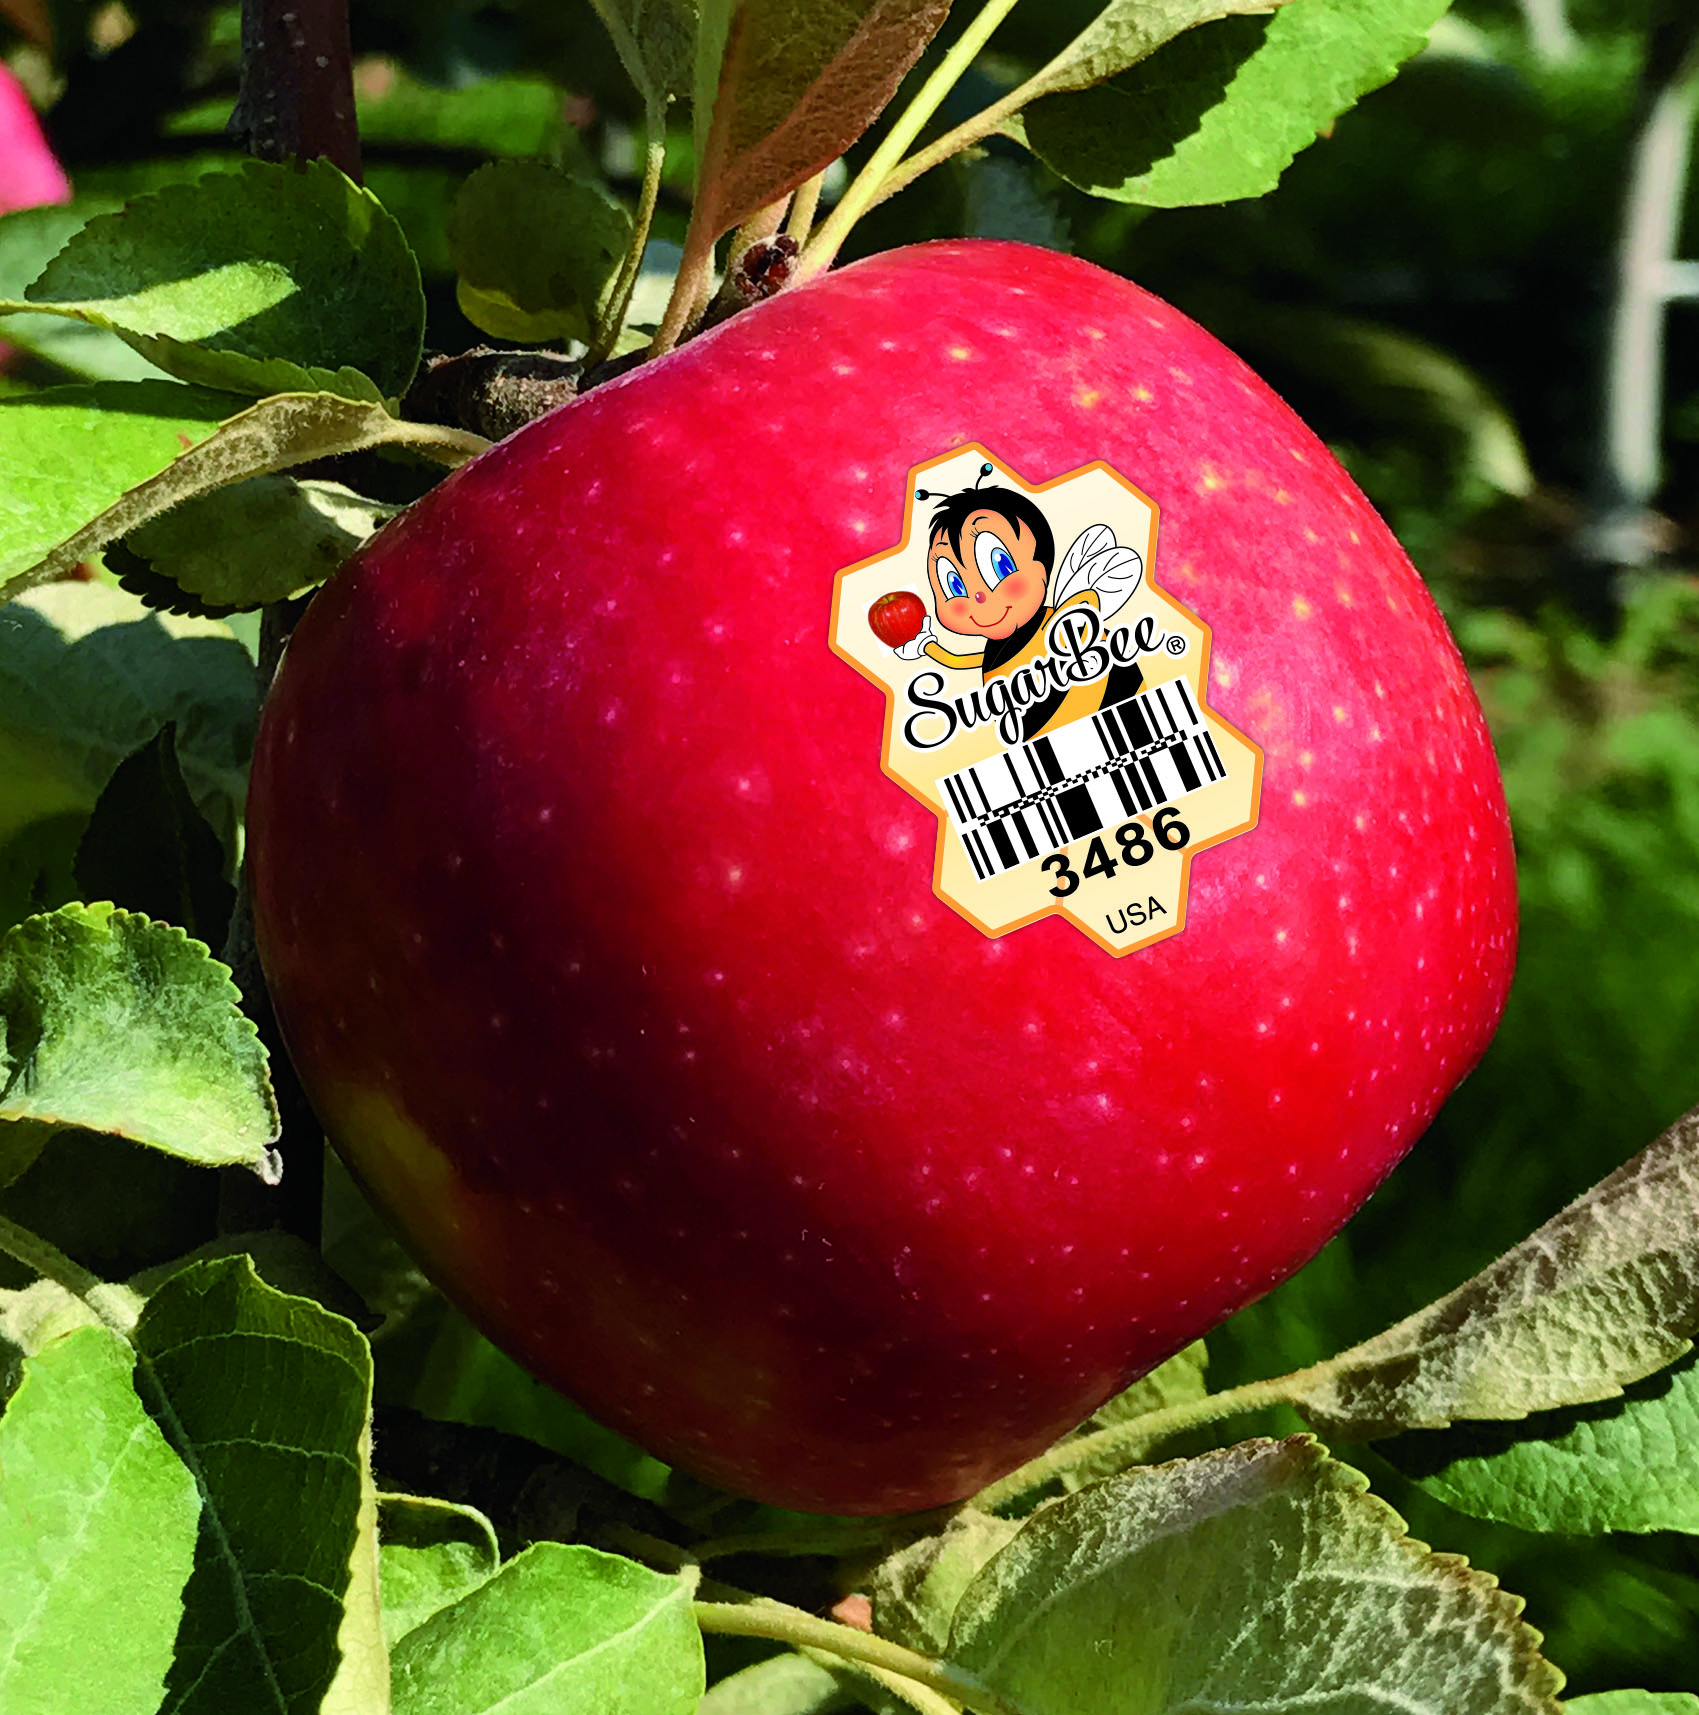 Chelan Fresh: SugarBee® apple hits sweet spot - Chelan Fresh